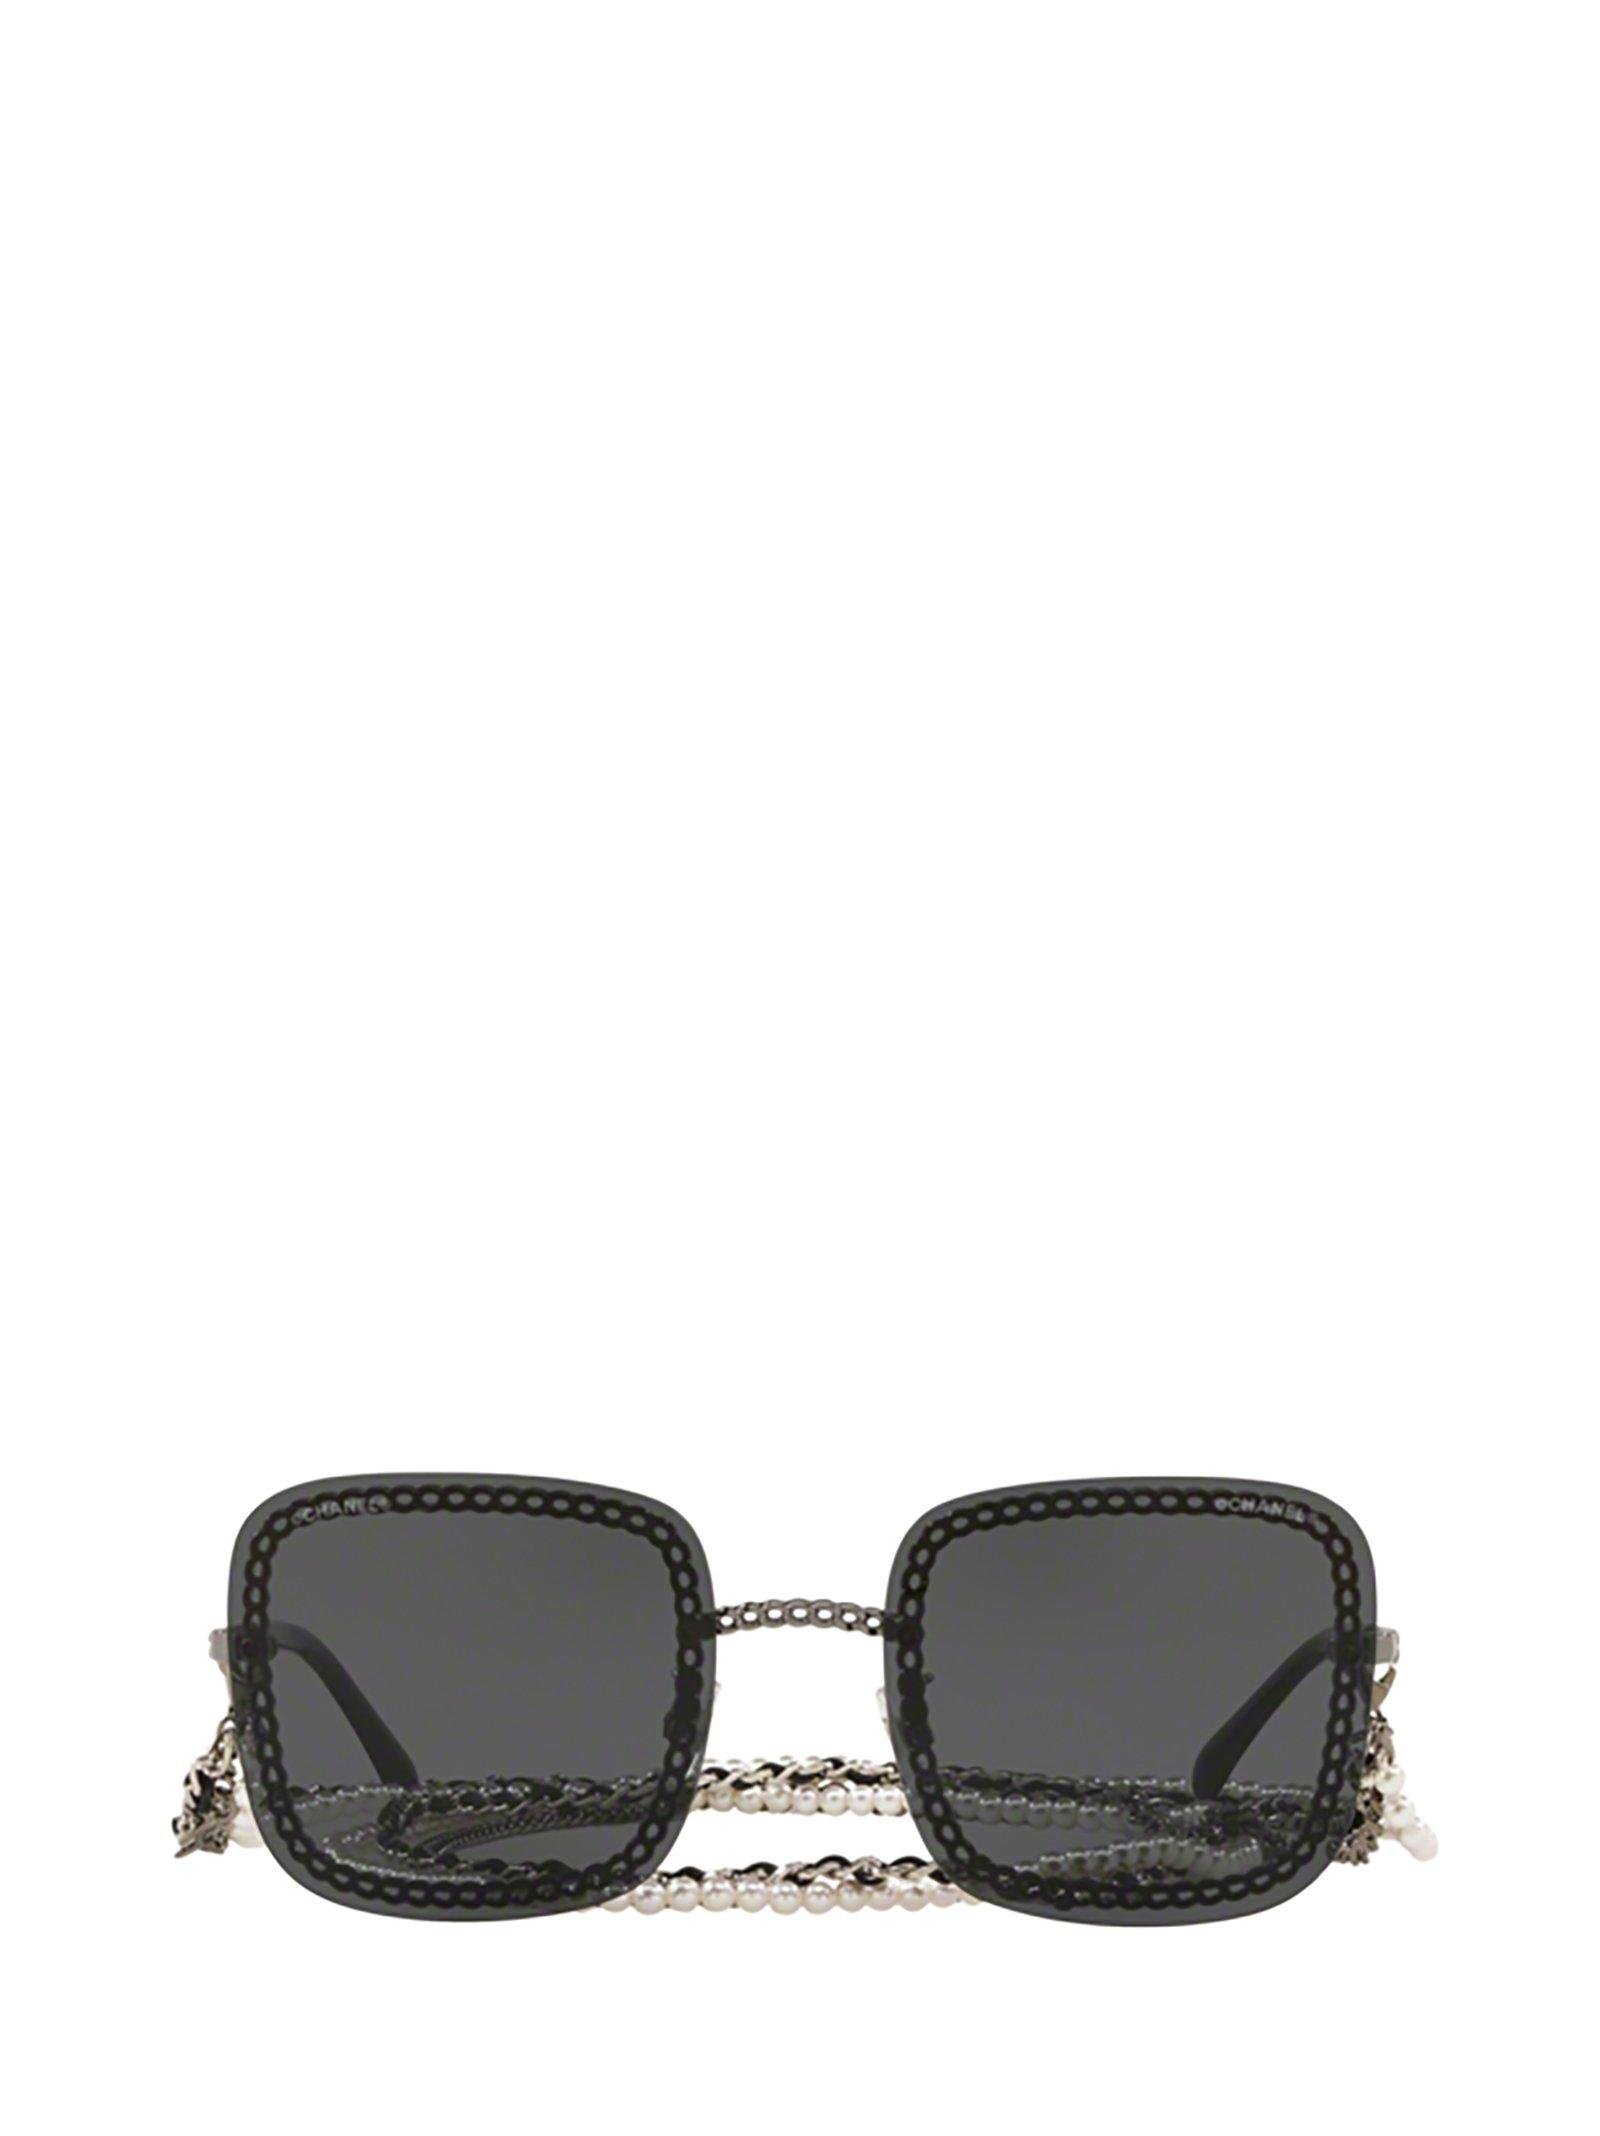 Chanel Sqaure Frame Sunglass Black